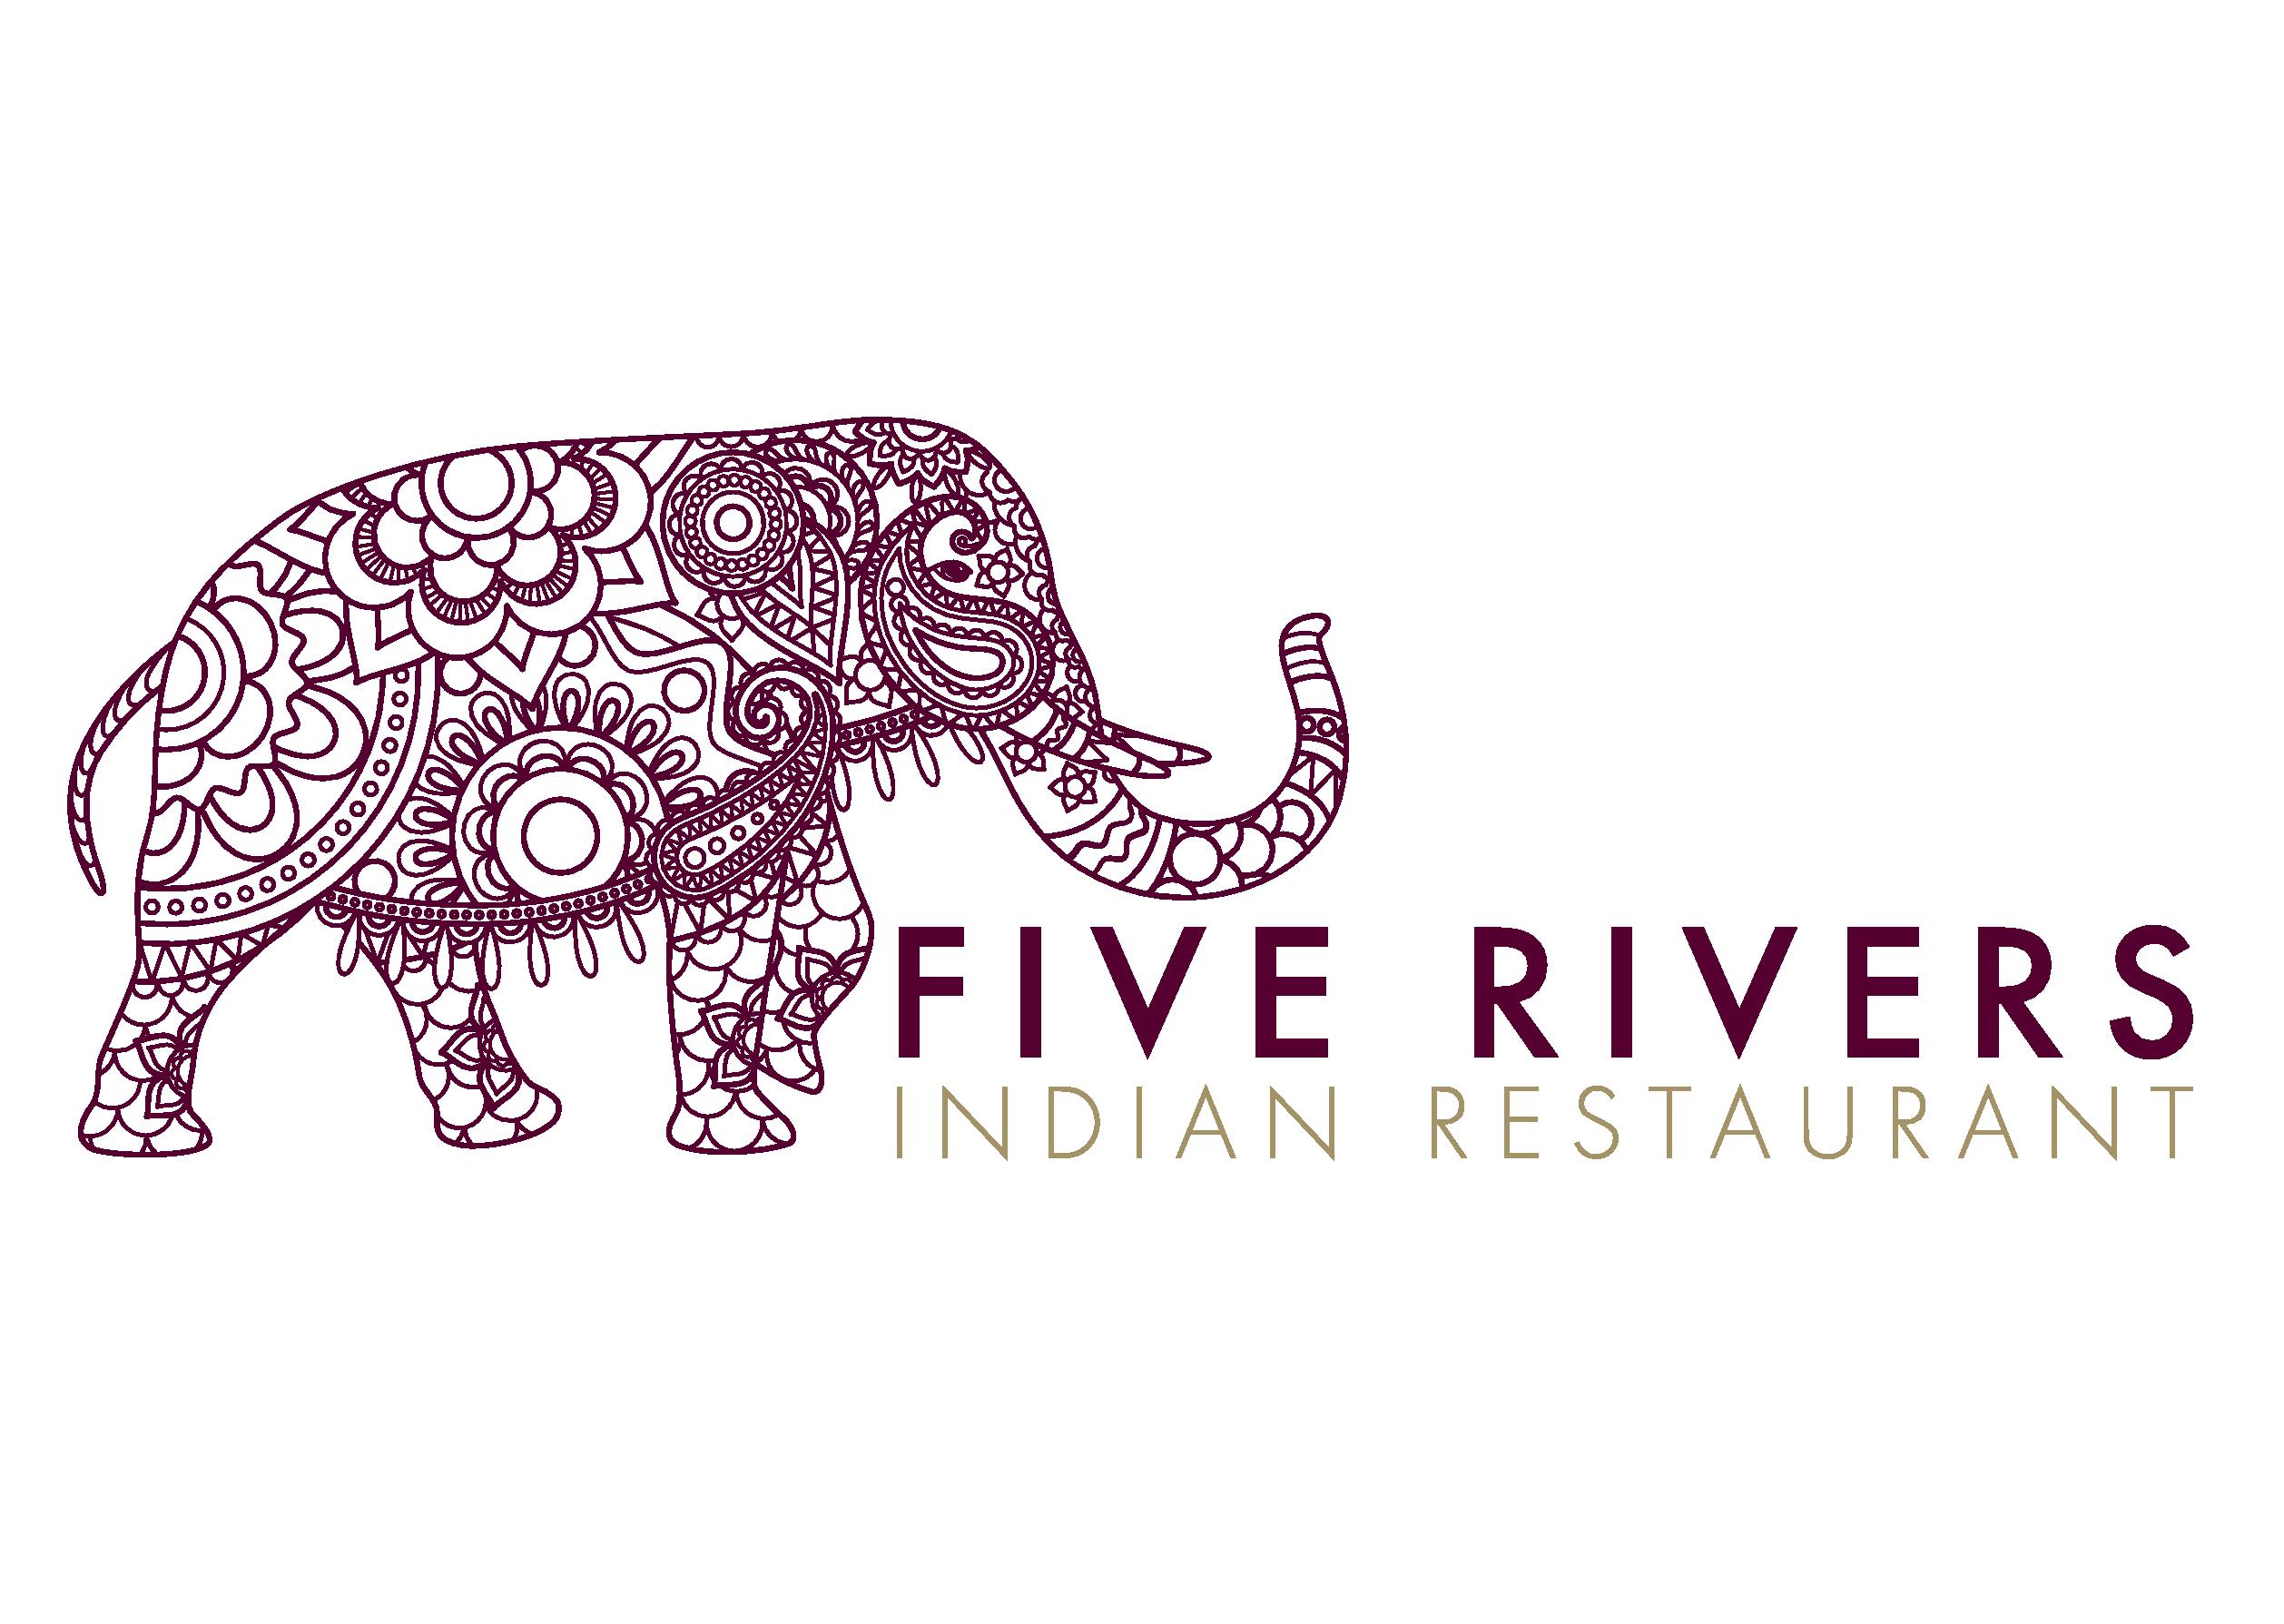 FIVE RIVERS